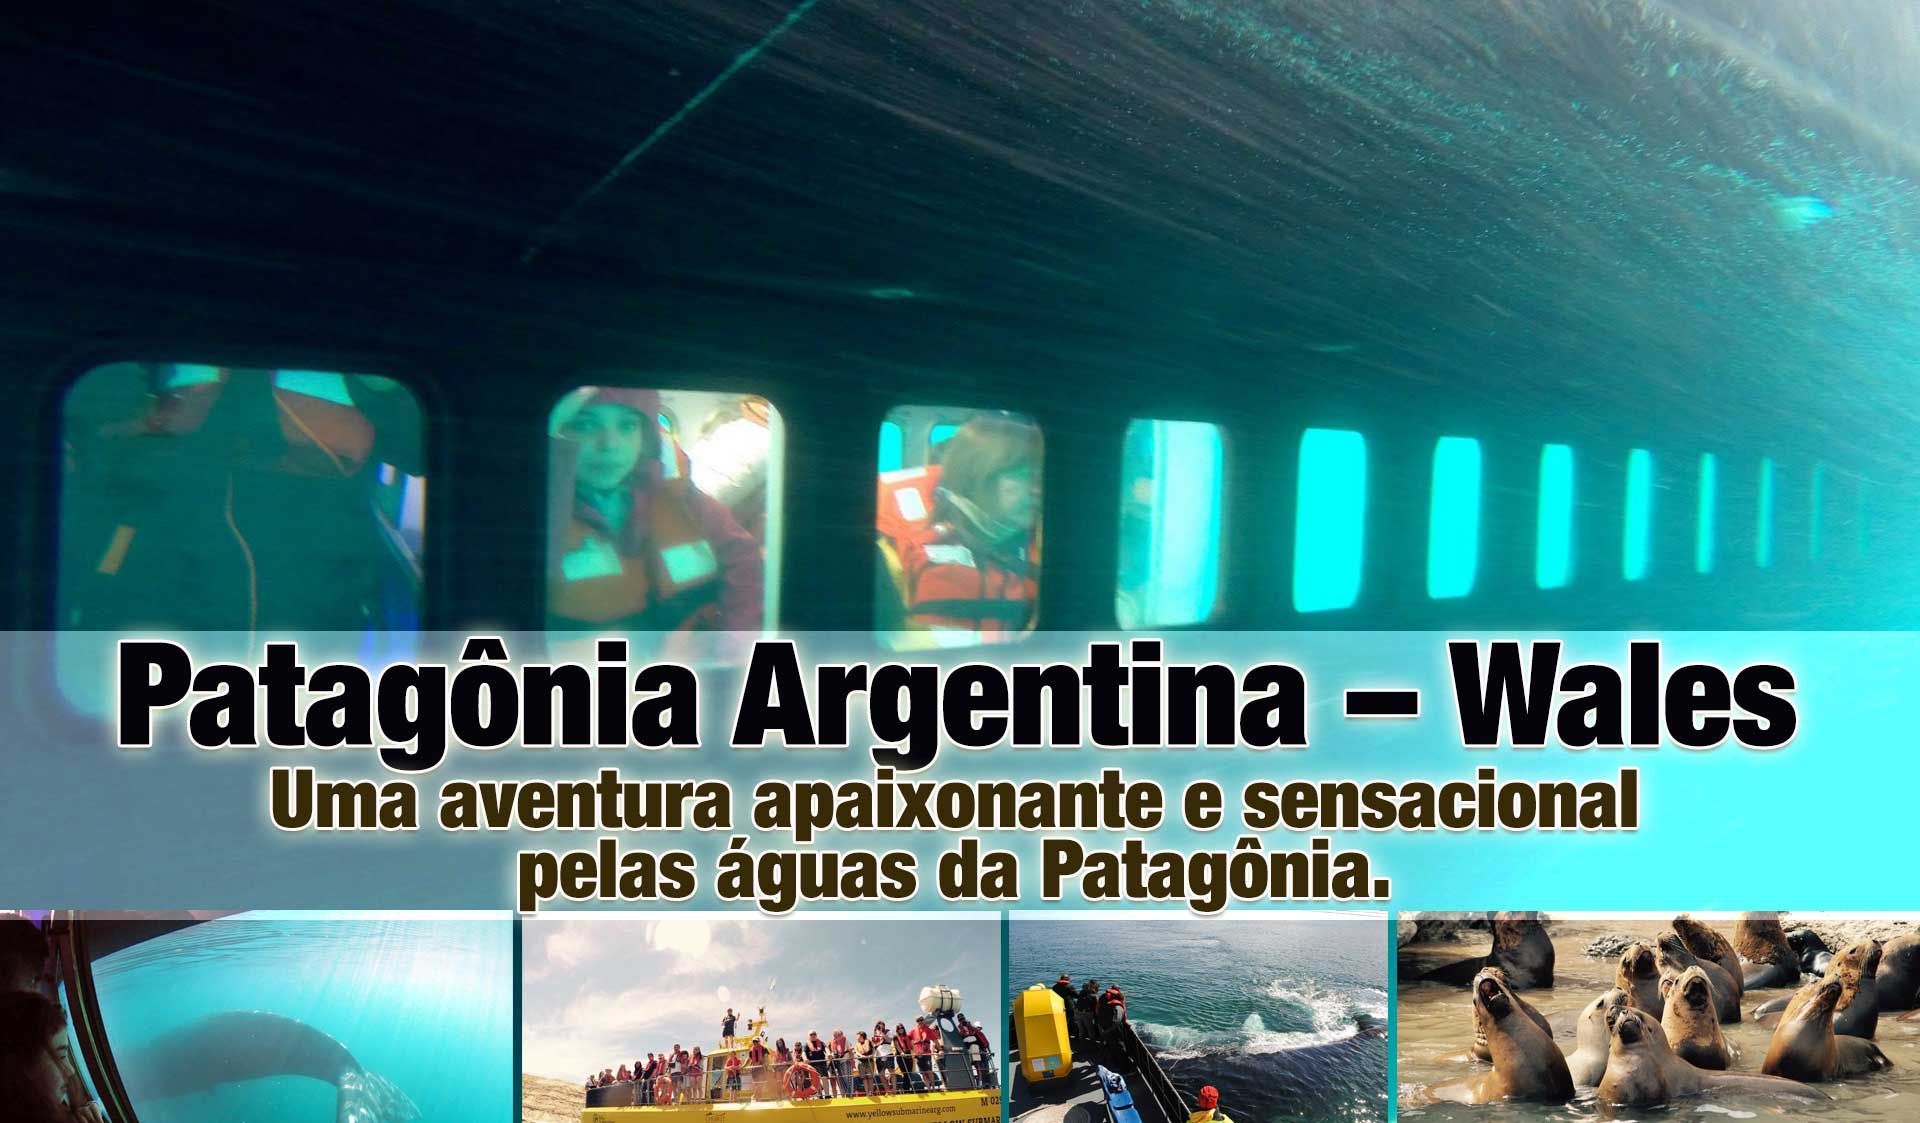 Argentina - Baleias